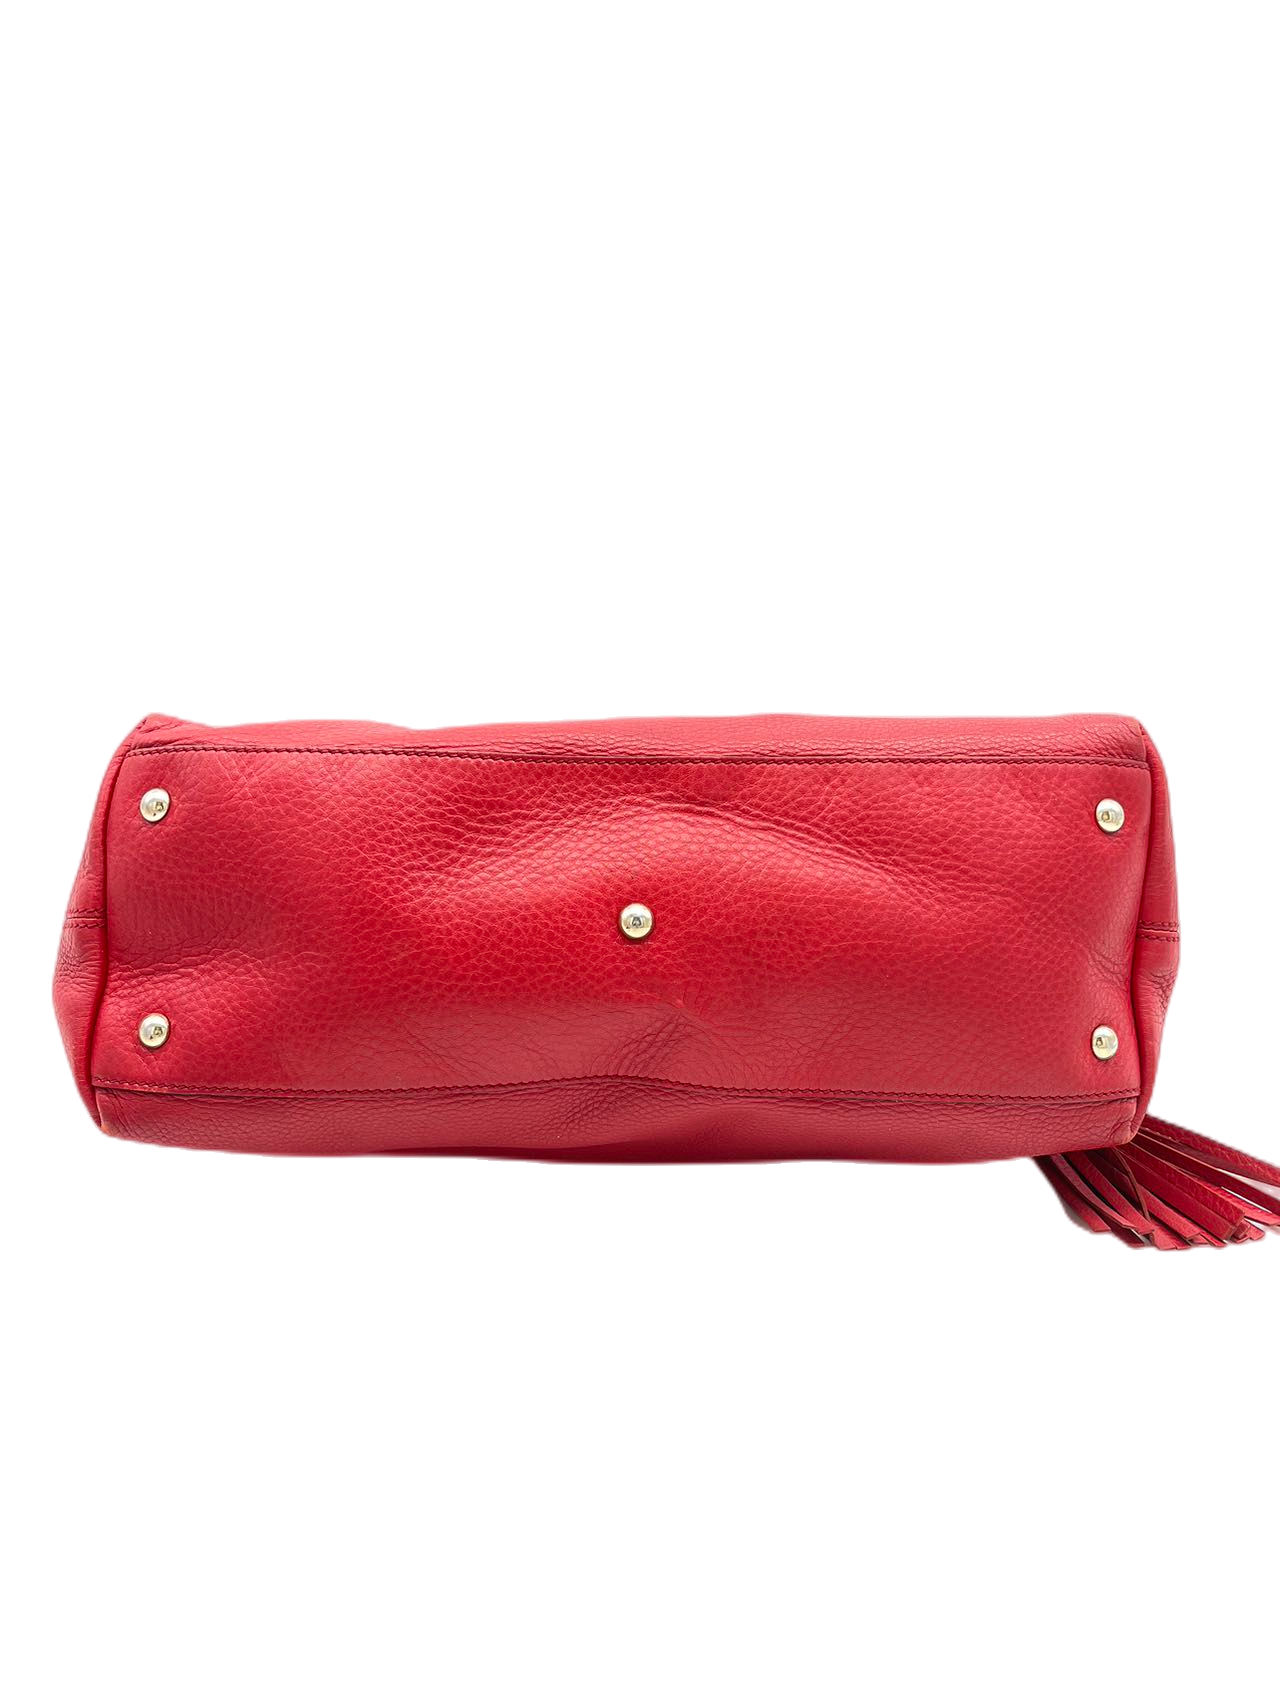 Preloved Gucci GG Logo Red Leather Soho Tassel Bag Satchel